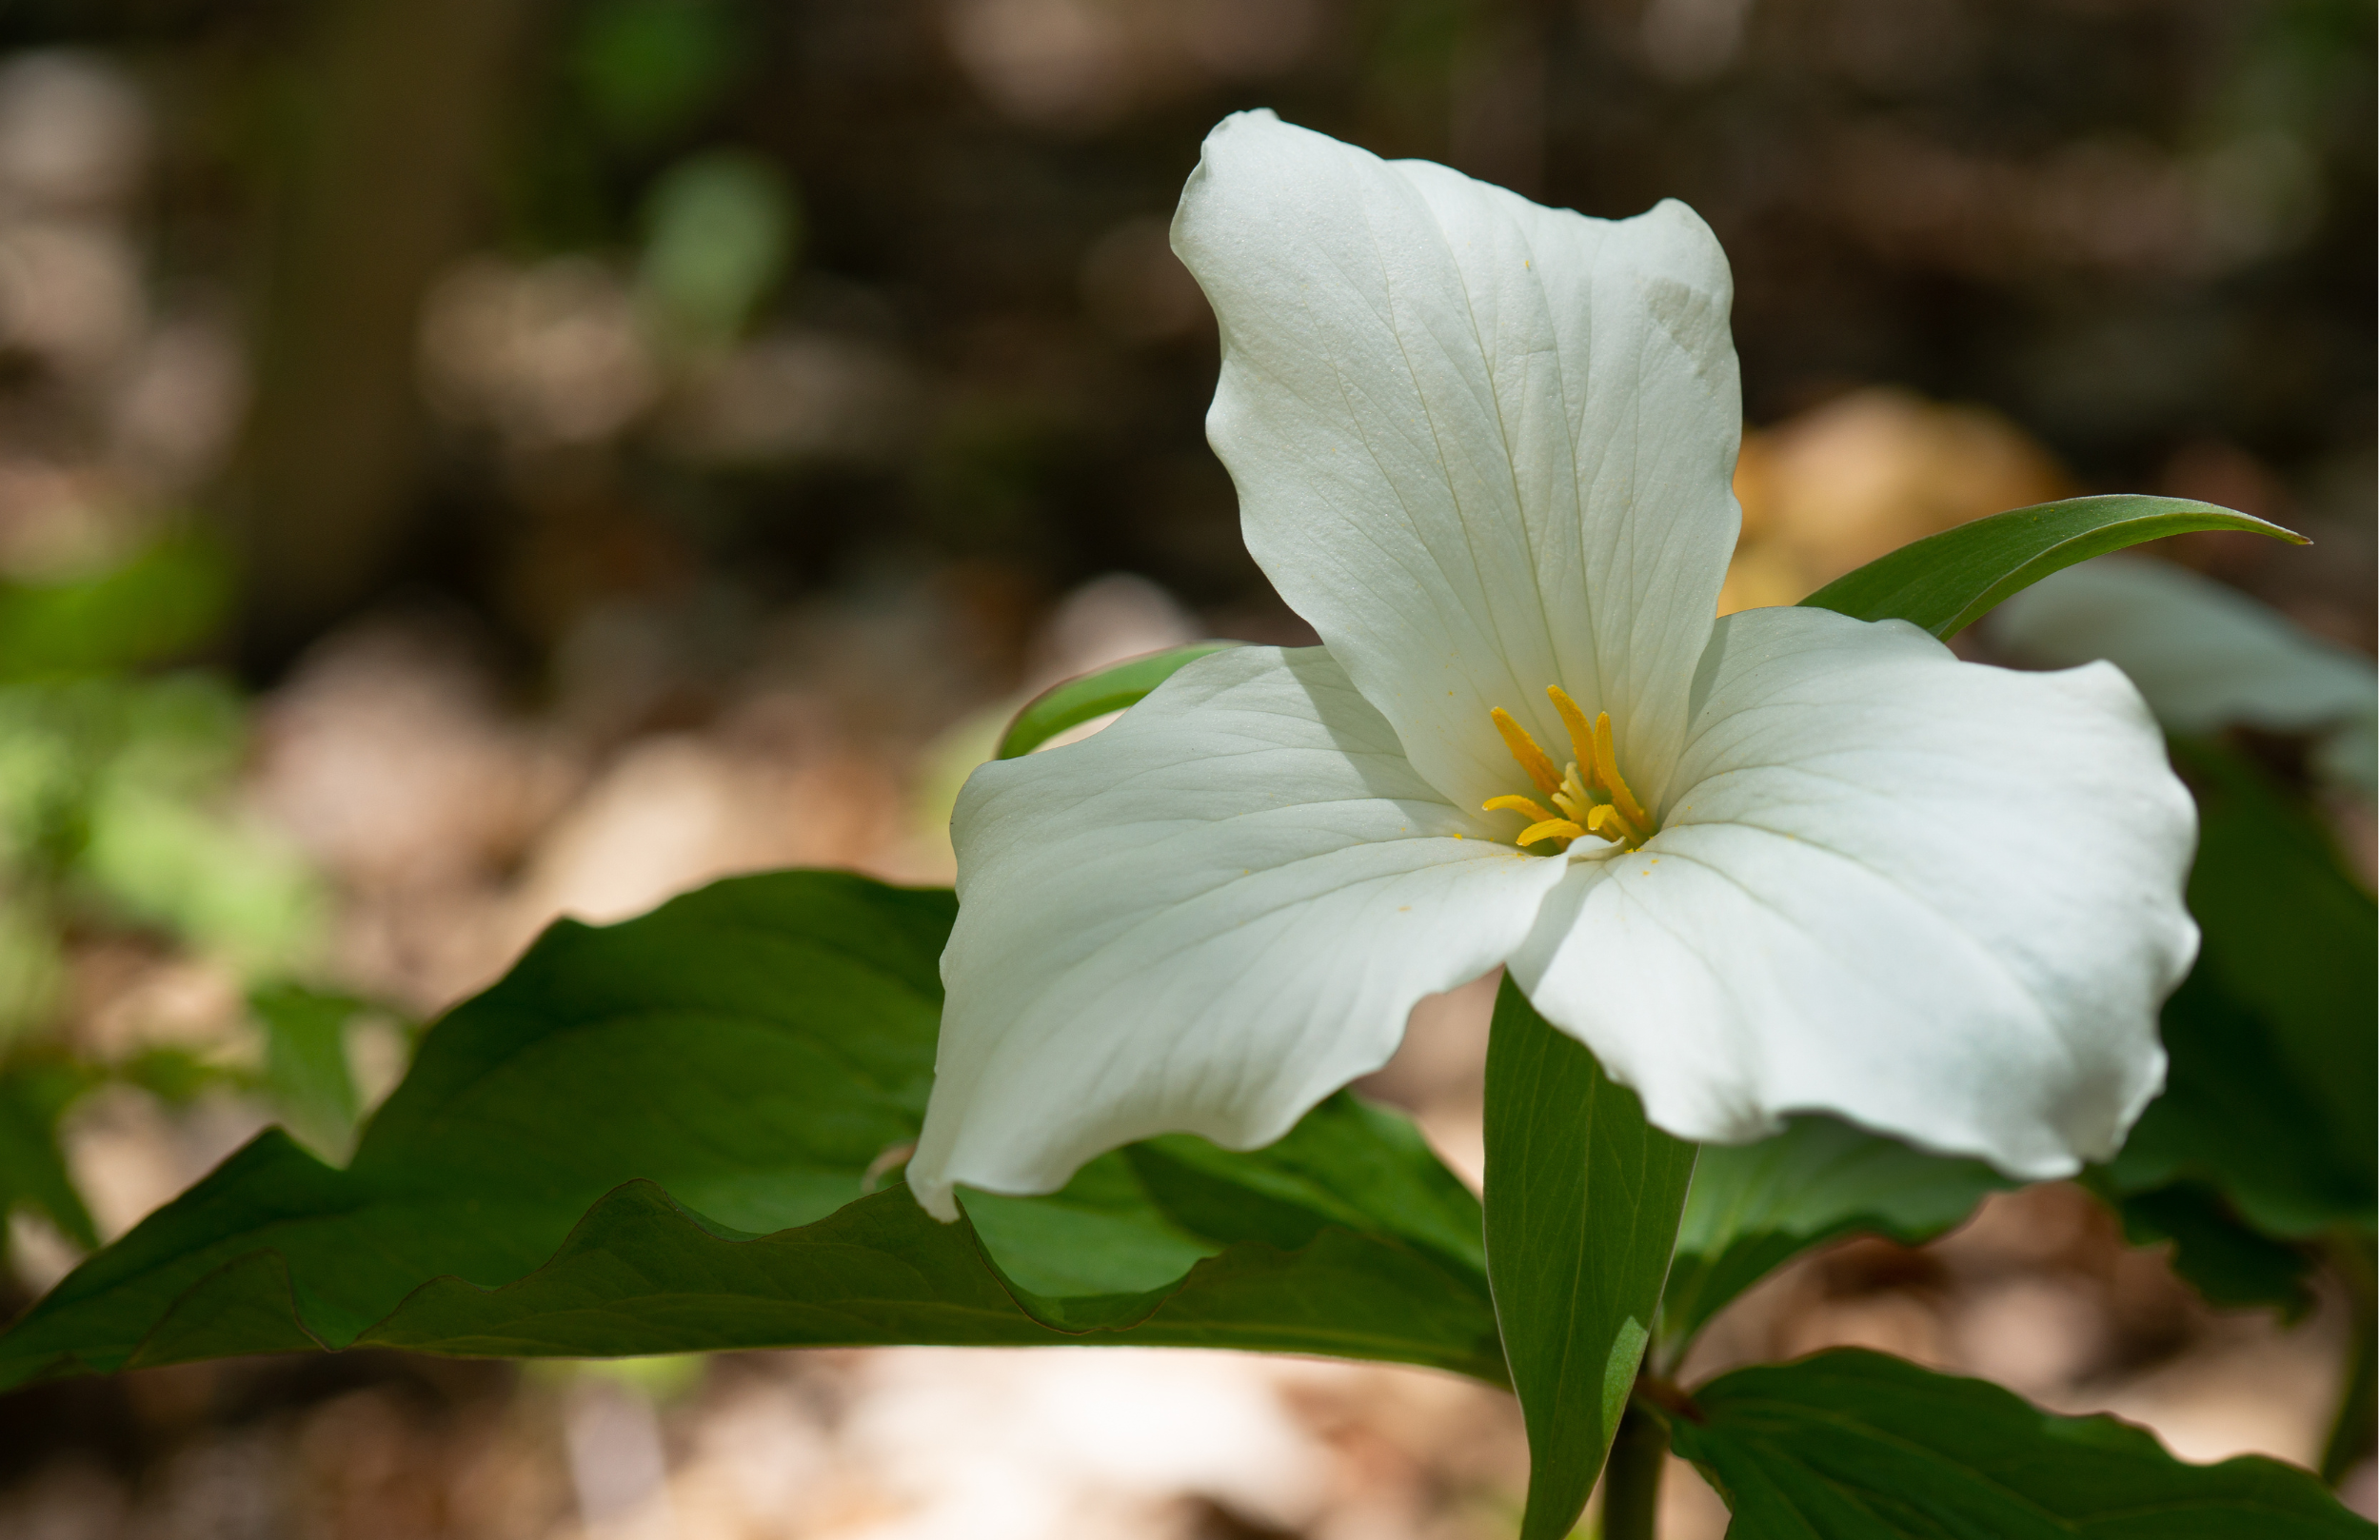 A close-up photograph of a white trillium flower.